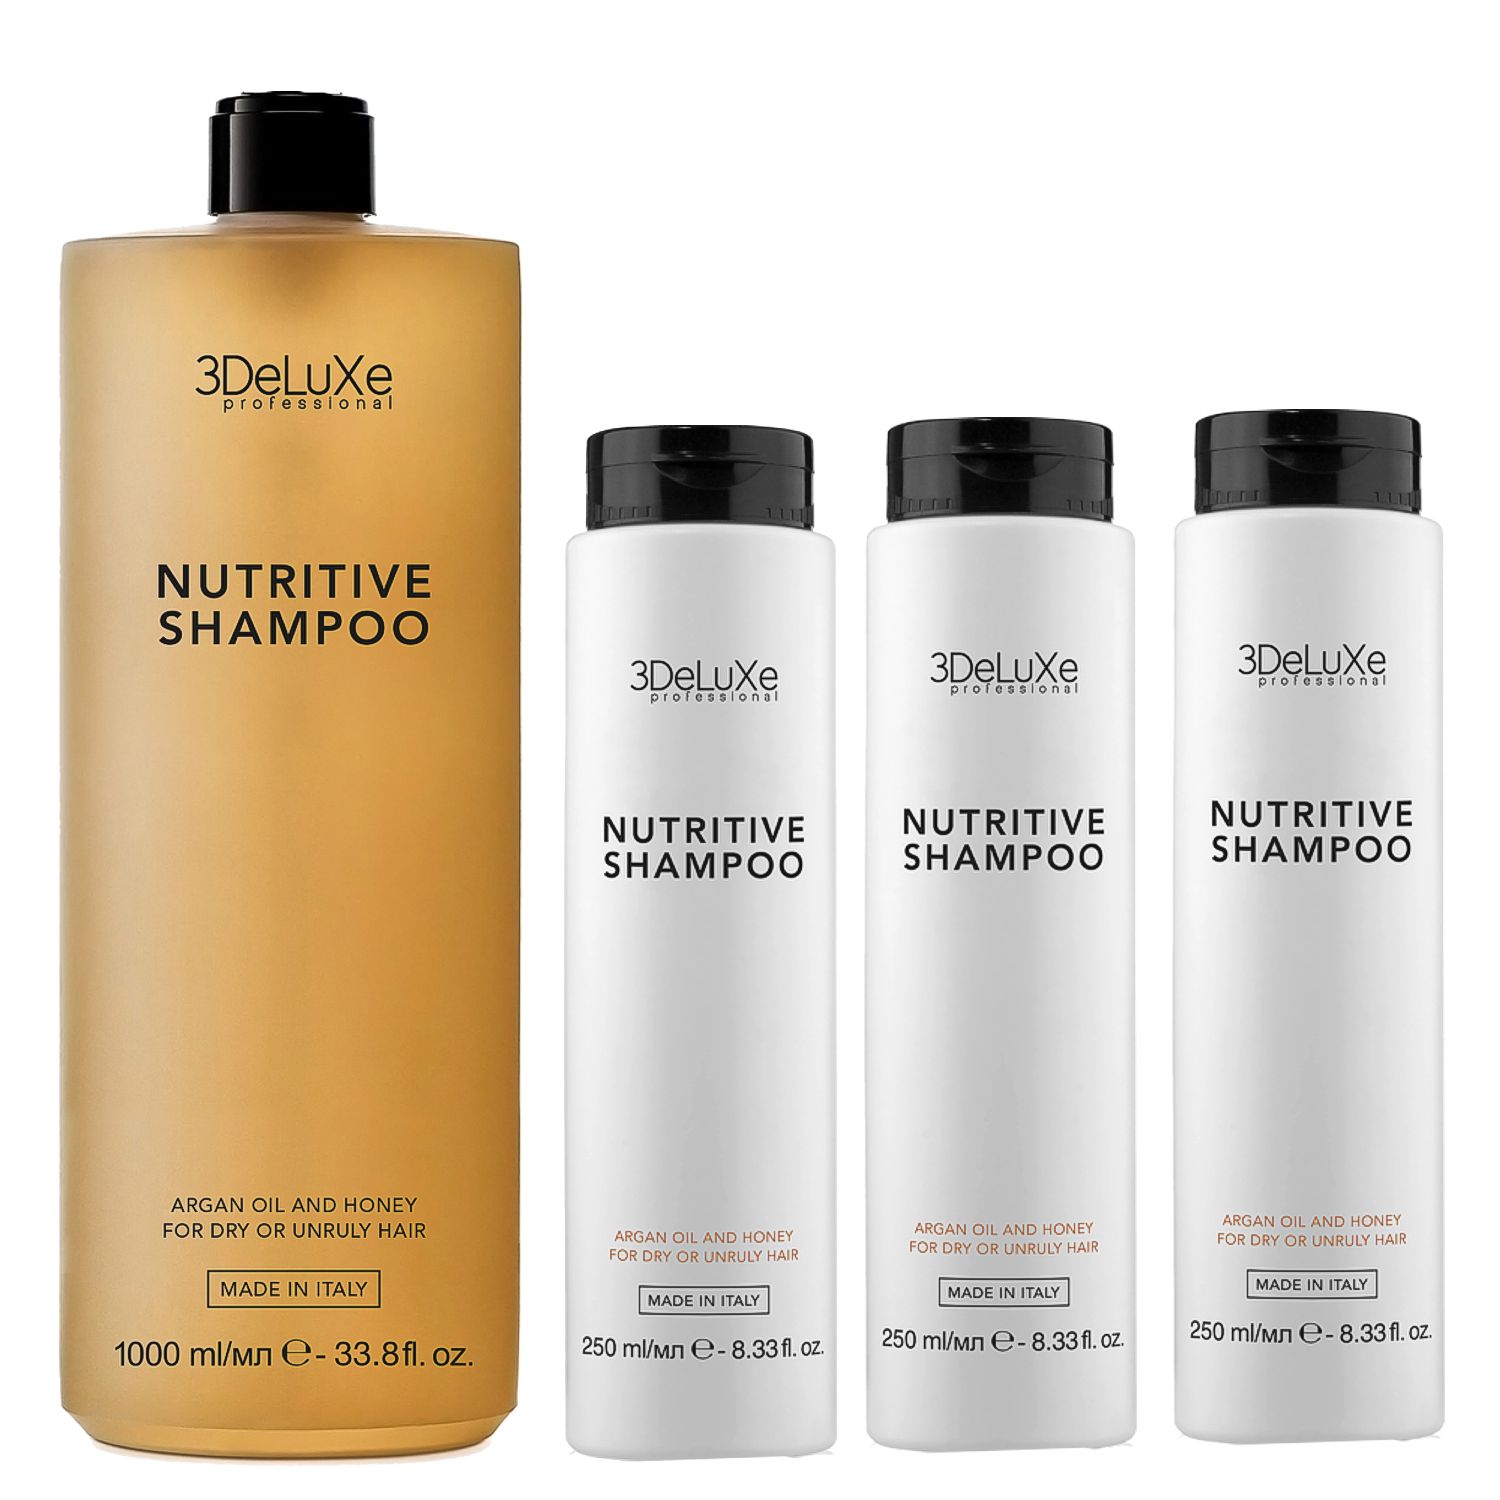 3DeLuXe Professional NUTRITIVE Shampoo Bundle 1+3